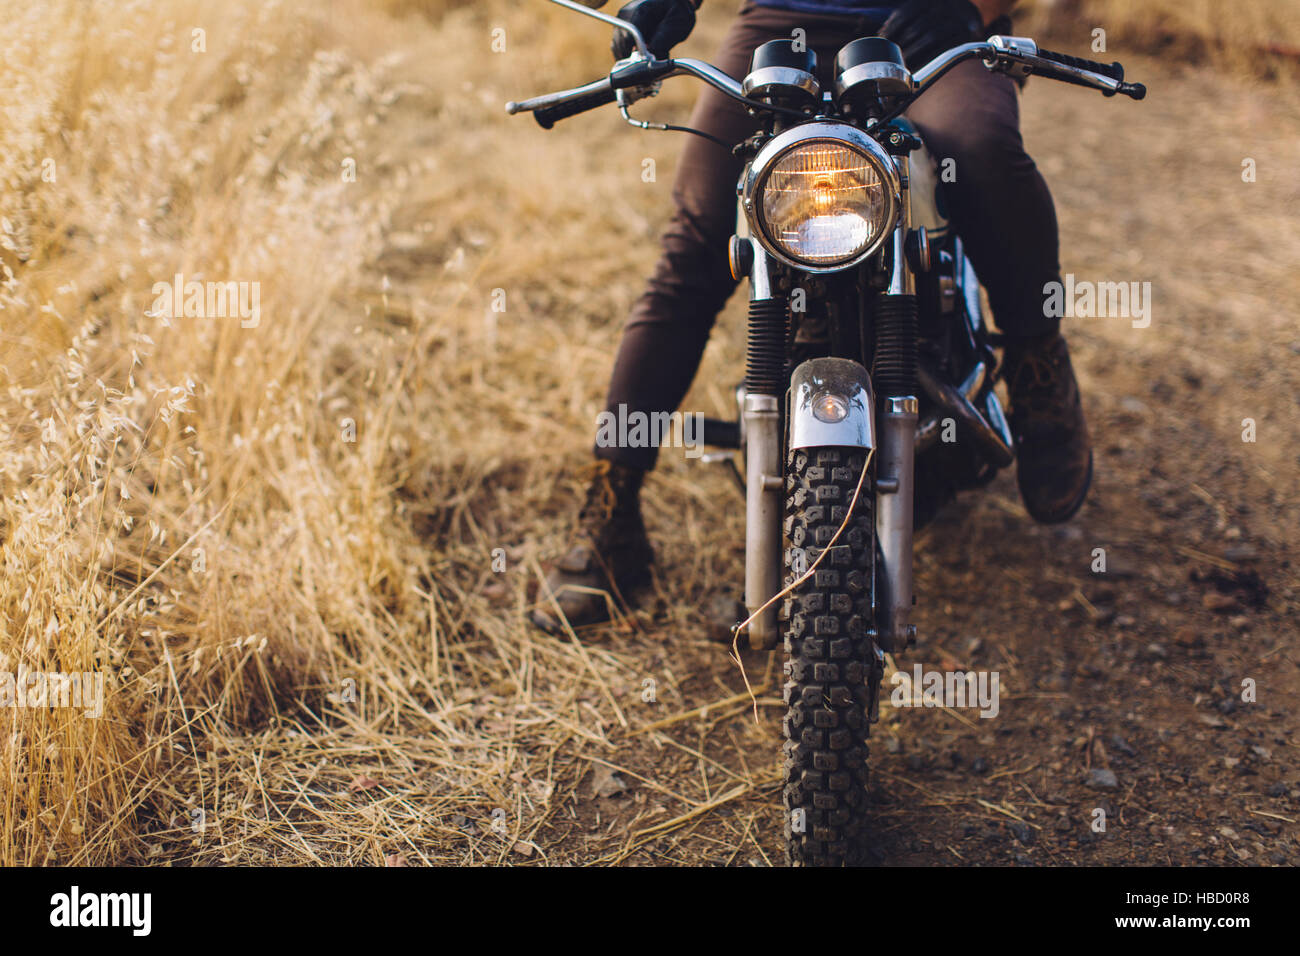 Man sitting on motorbike, low section Stock Photo